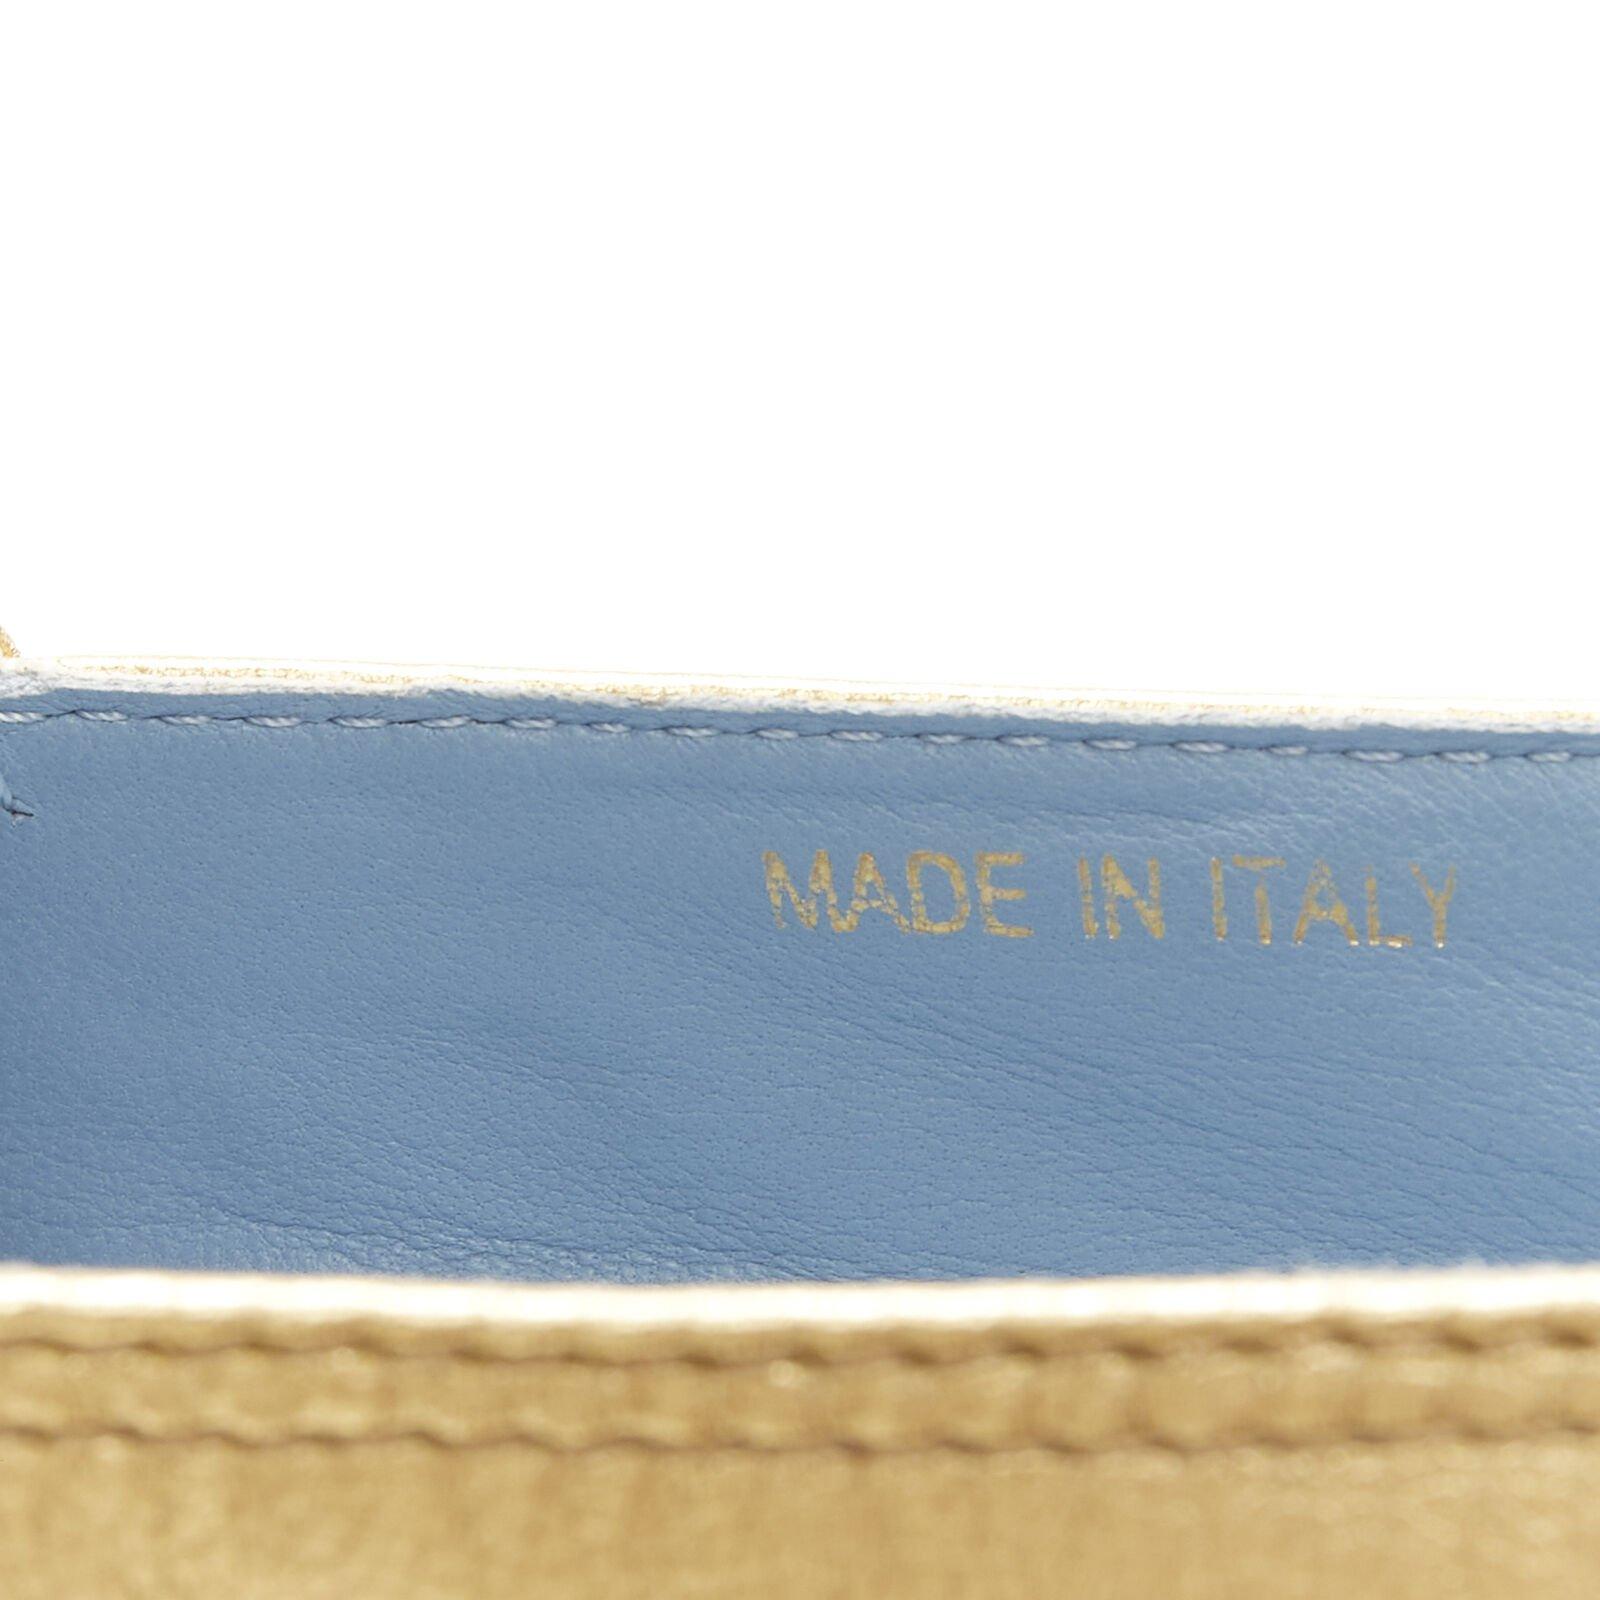 PRADA metallic gold leather logo peep toe jute platform espadrille shoe EU38 7